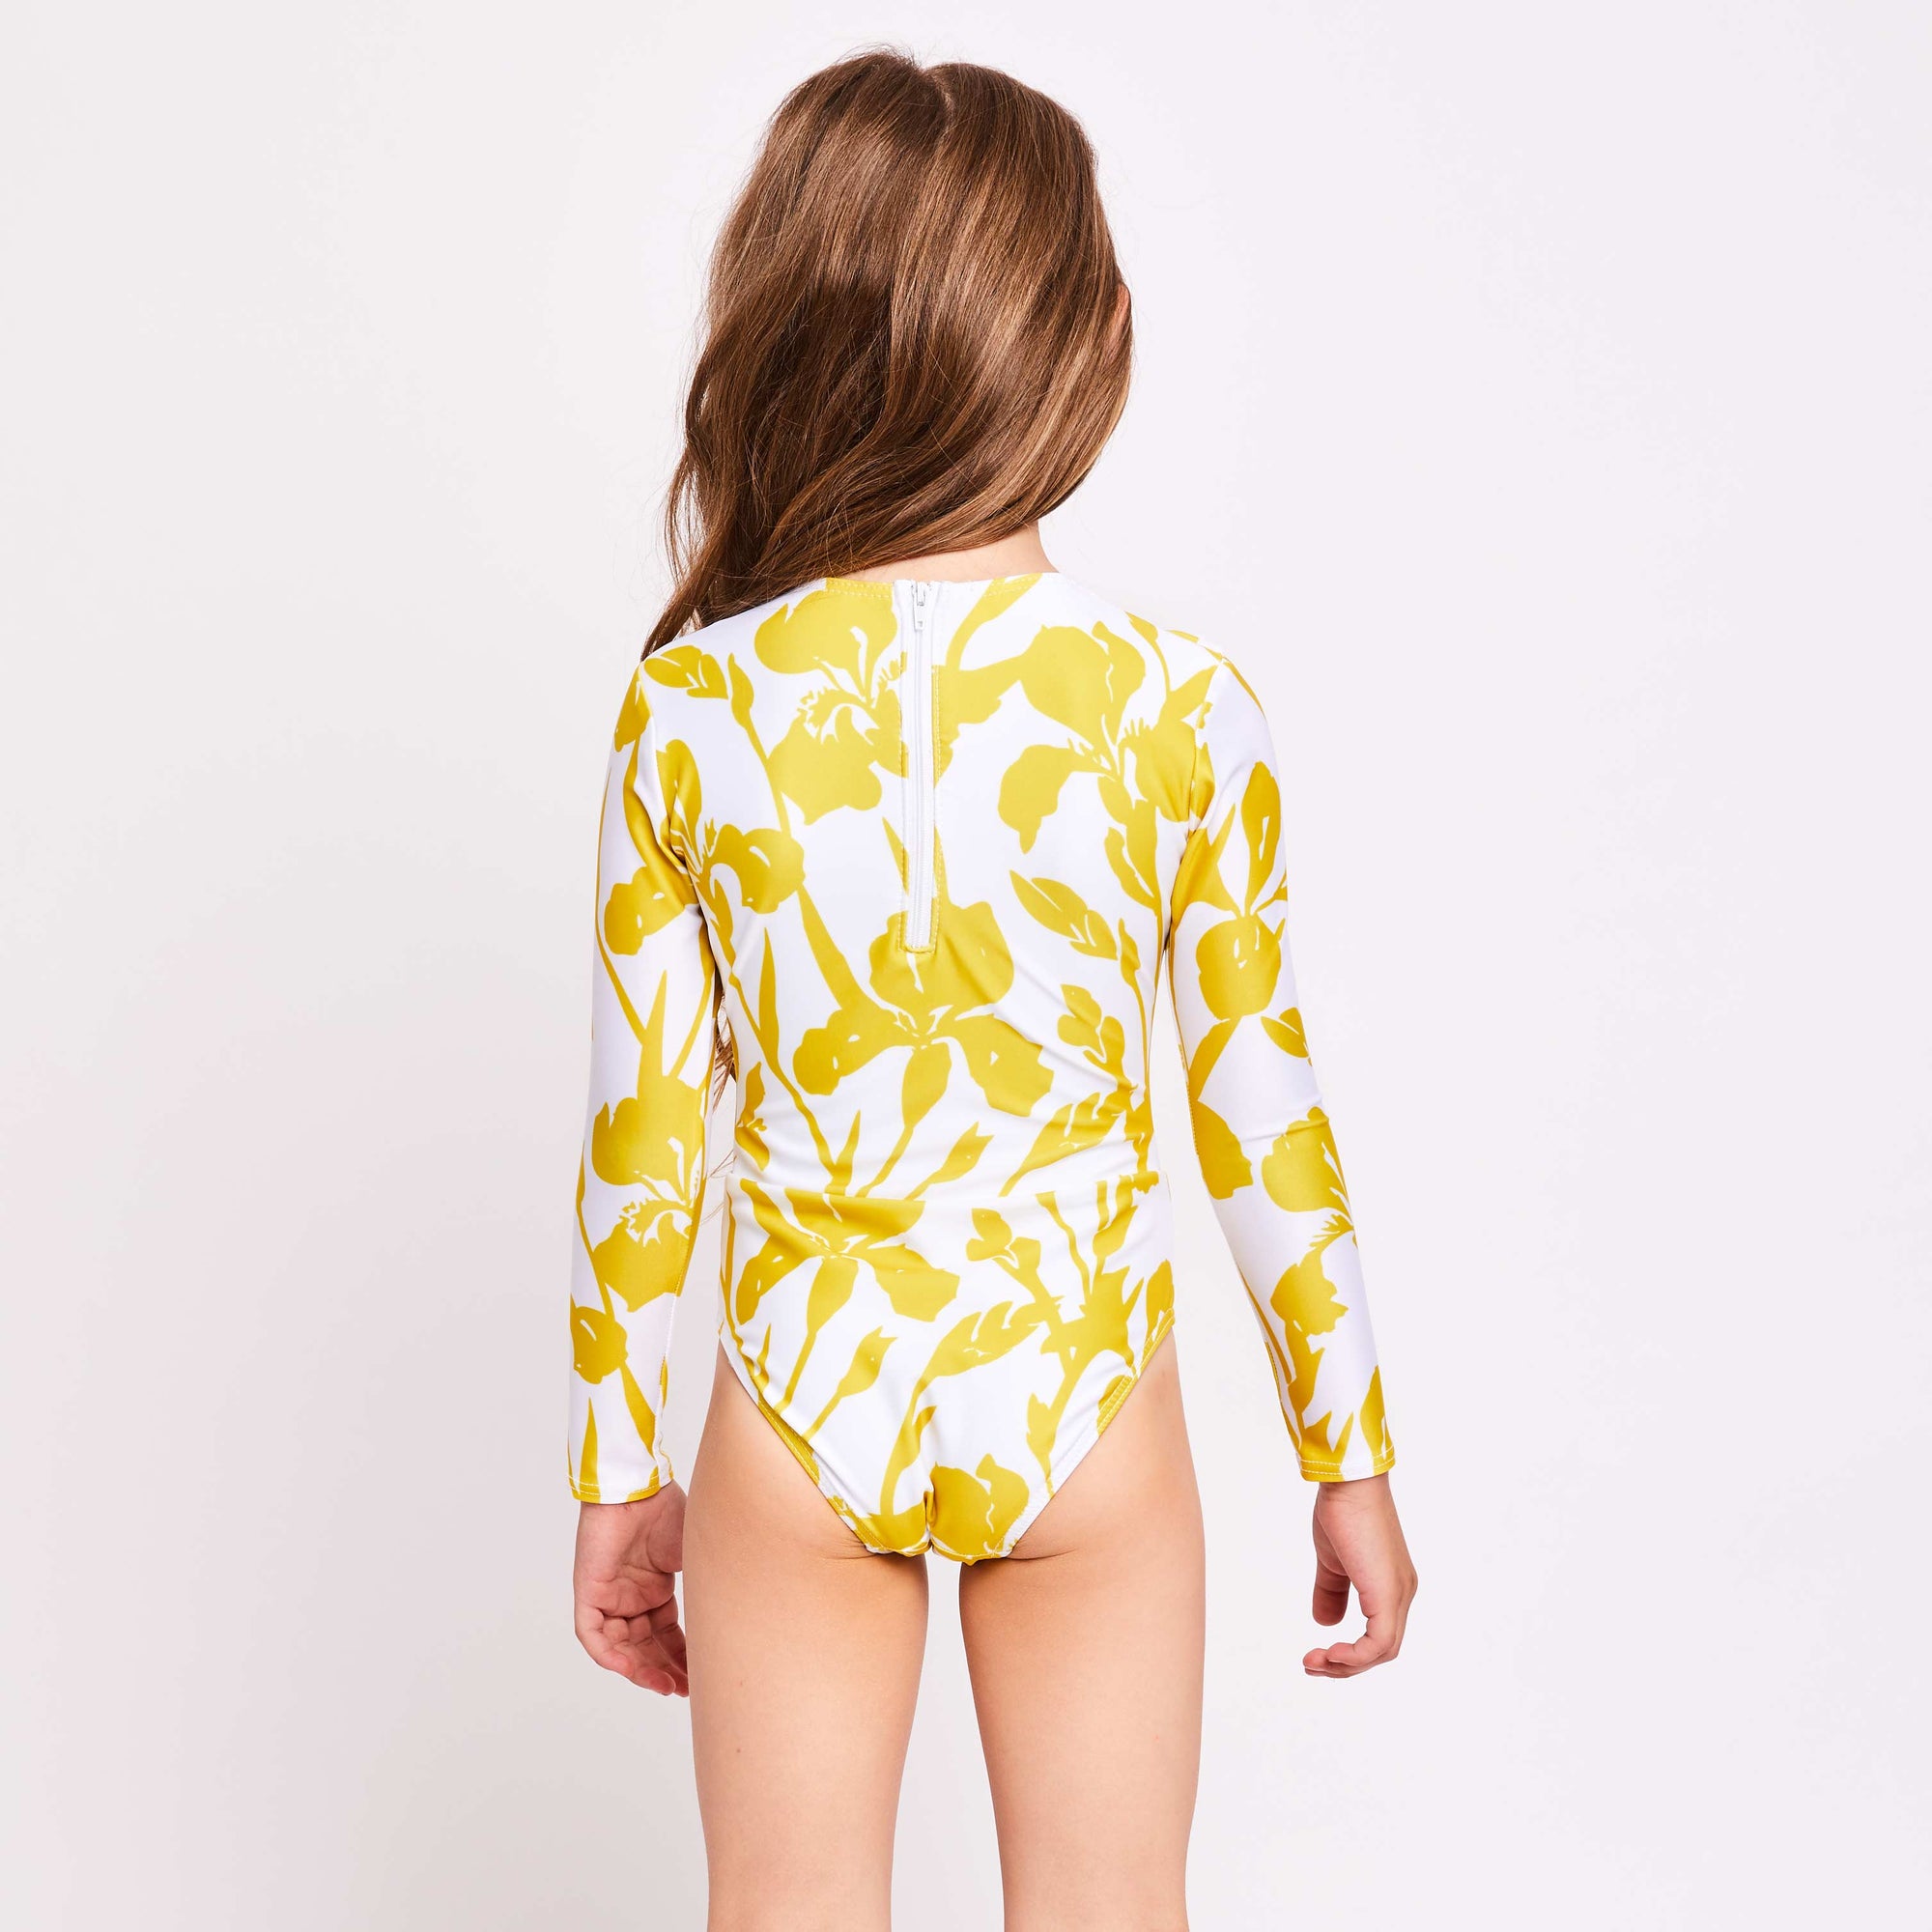 Little-Halle-surfsuit-long-sleeve-iris-yellow-back-contessa-volpi-matching-swimwear